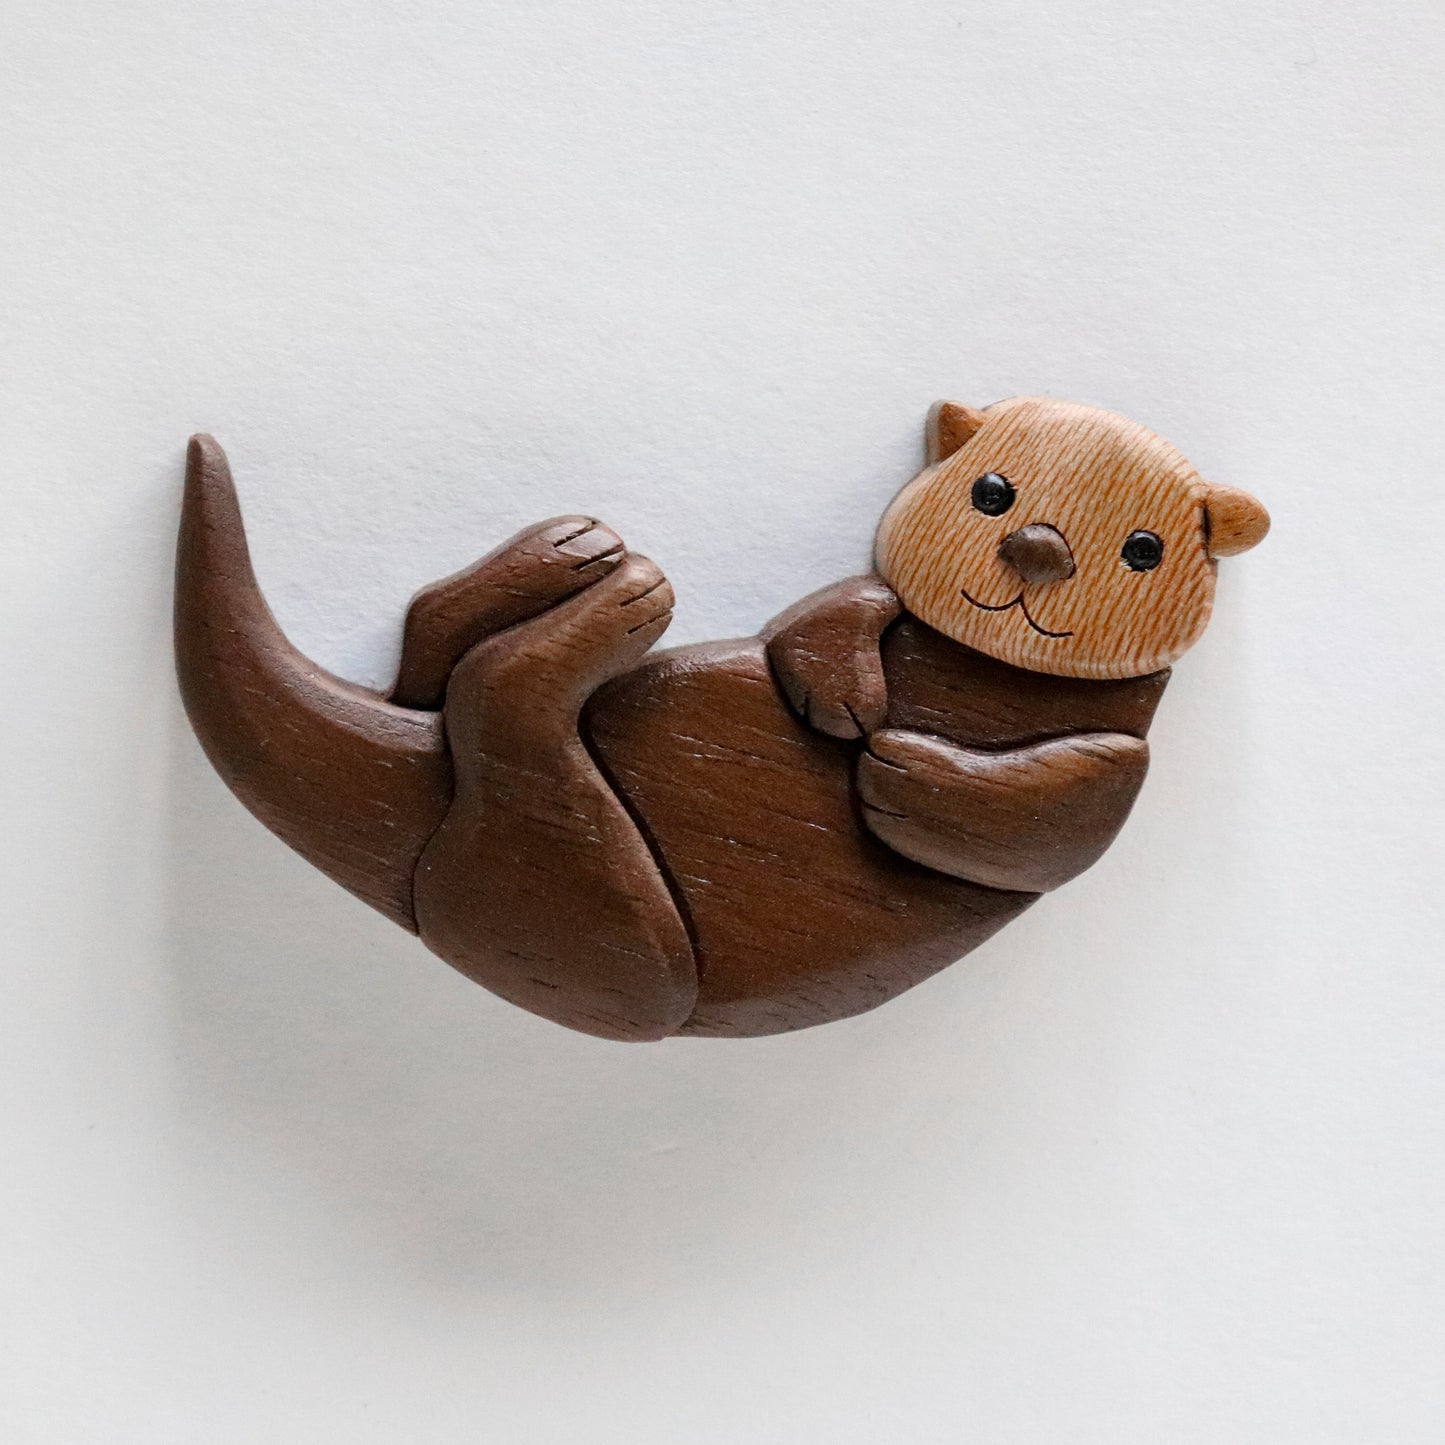 Sea Otter Magnet / Ornament